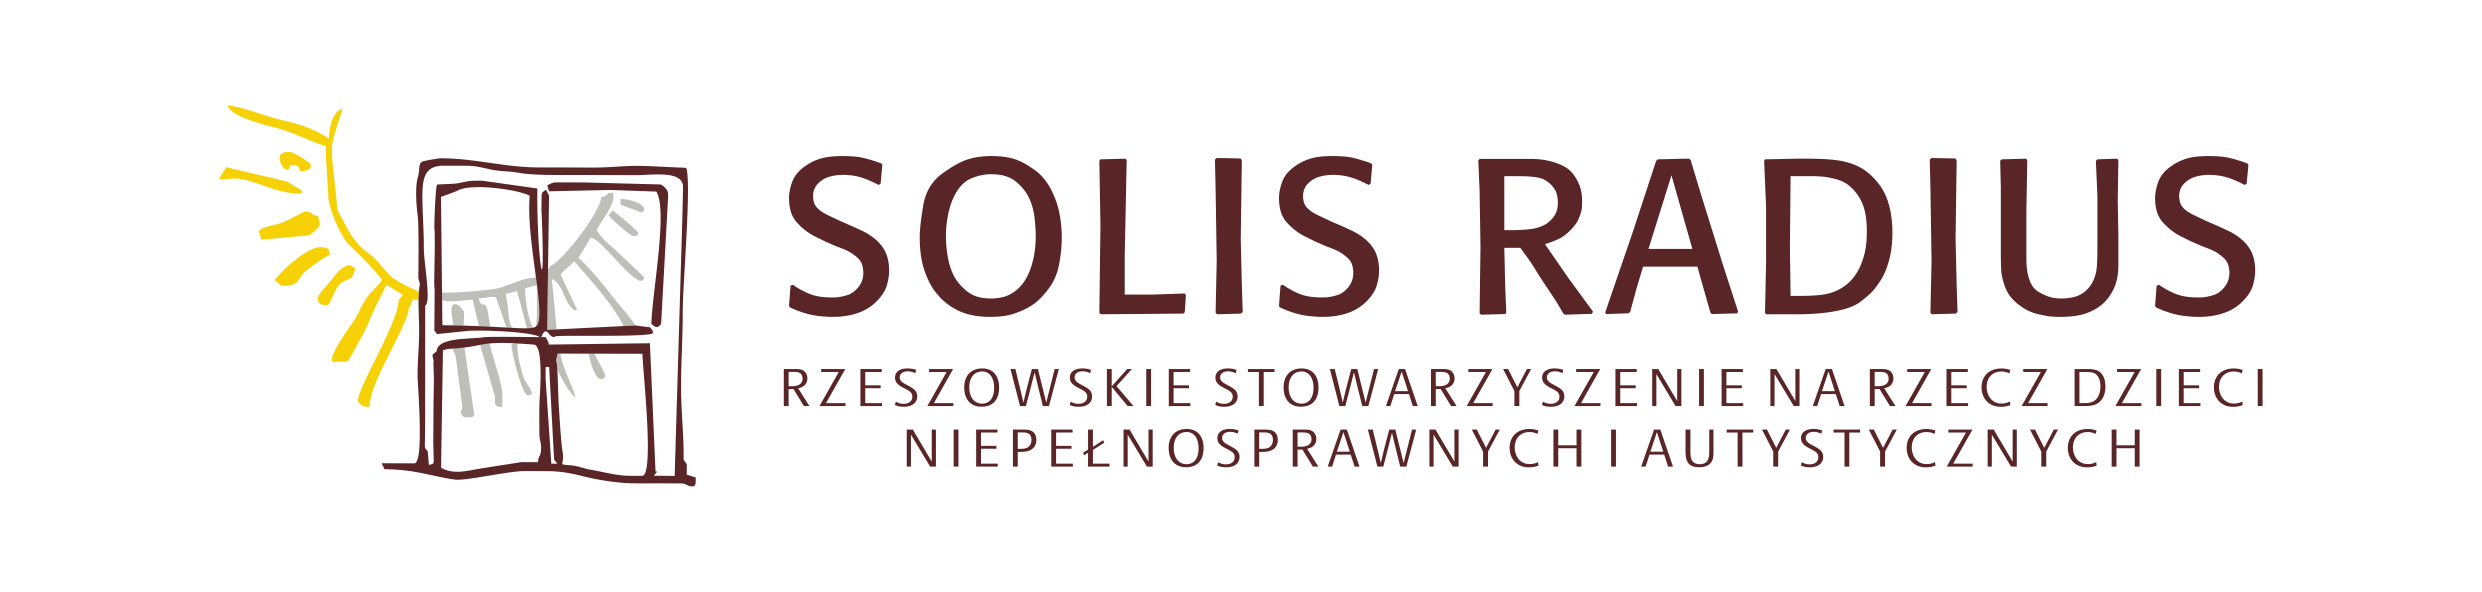 SolisRadius-logo-png